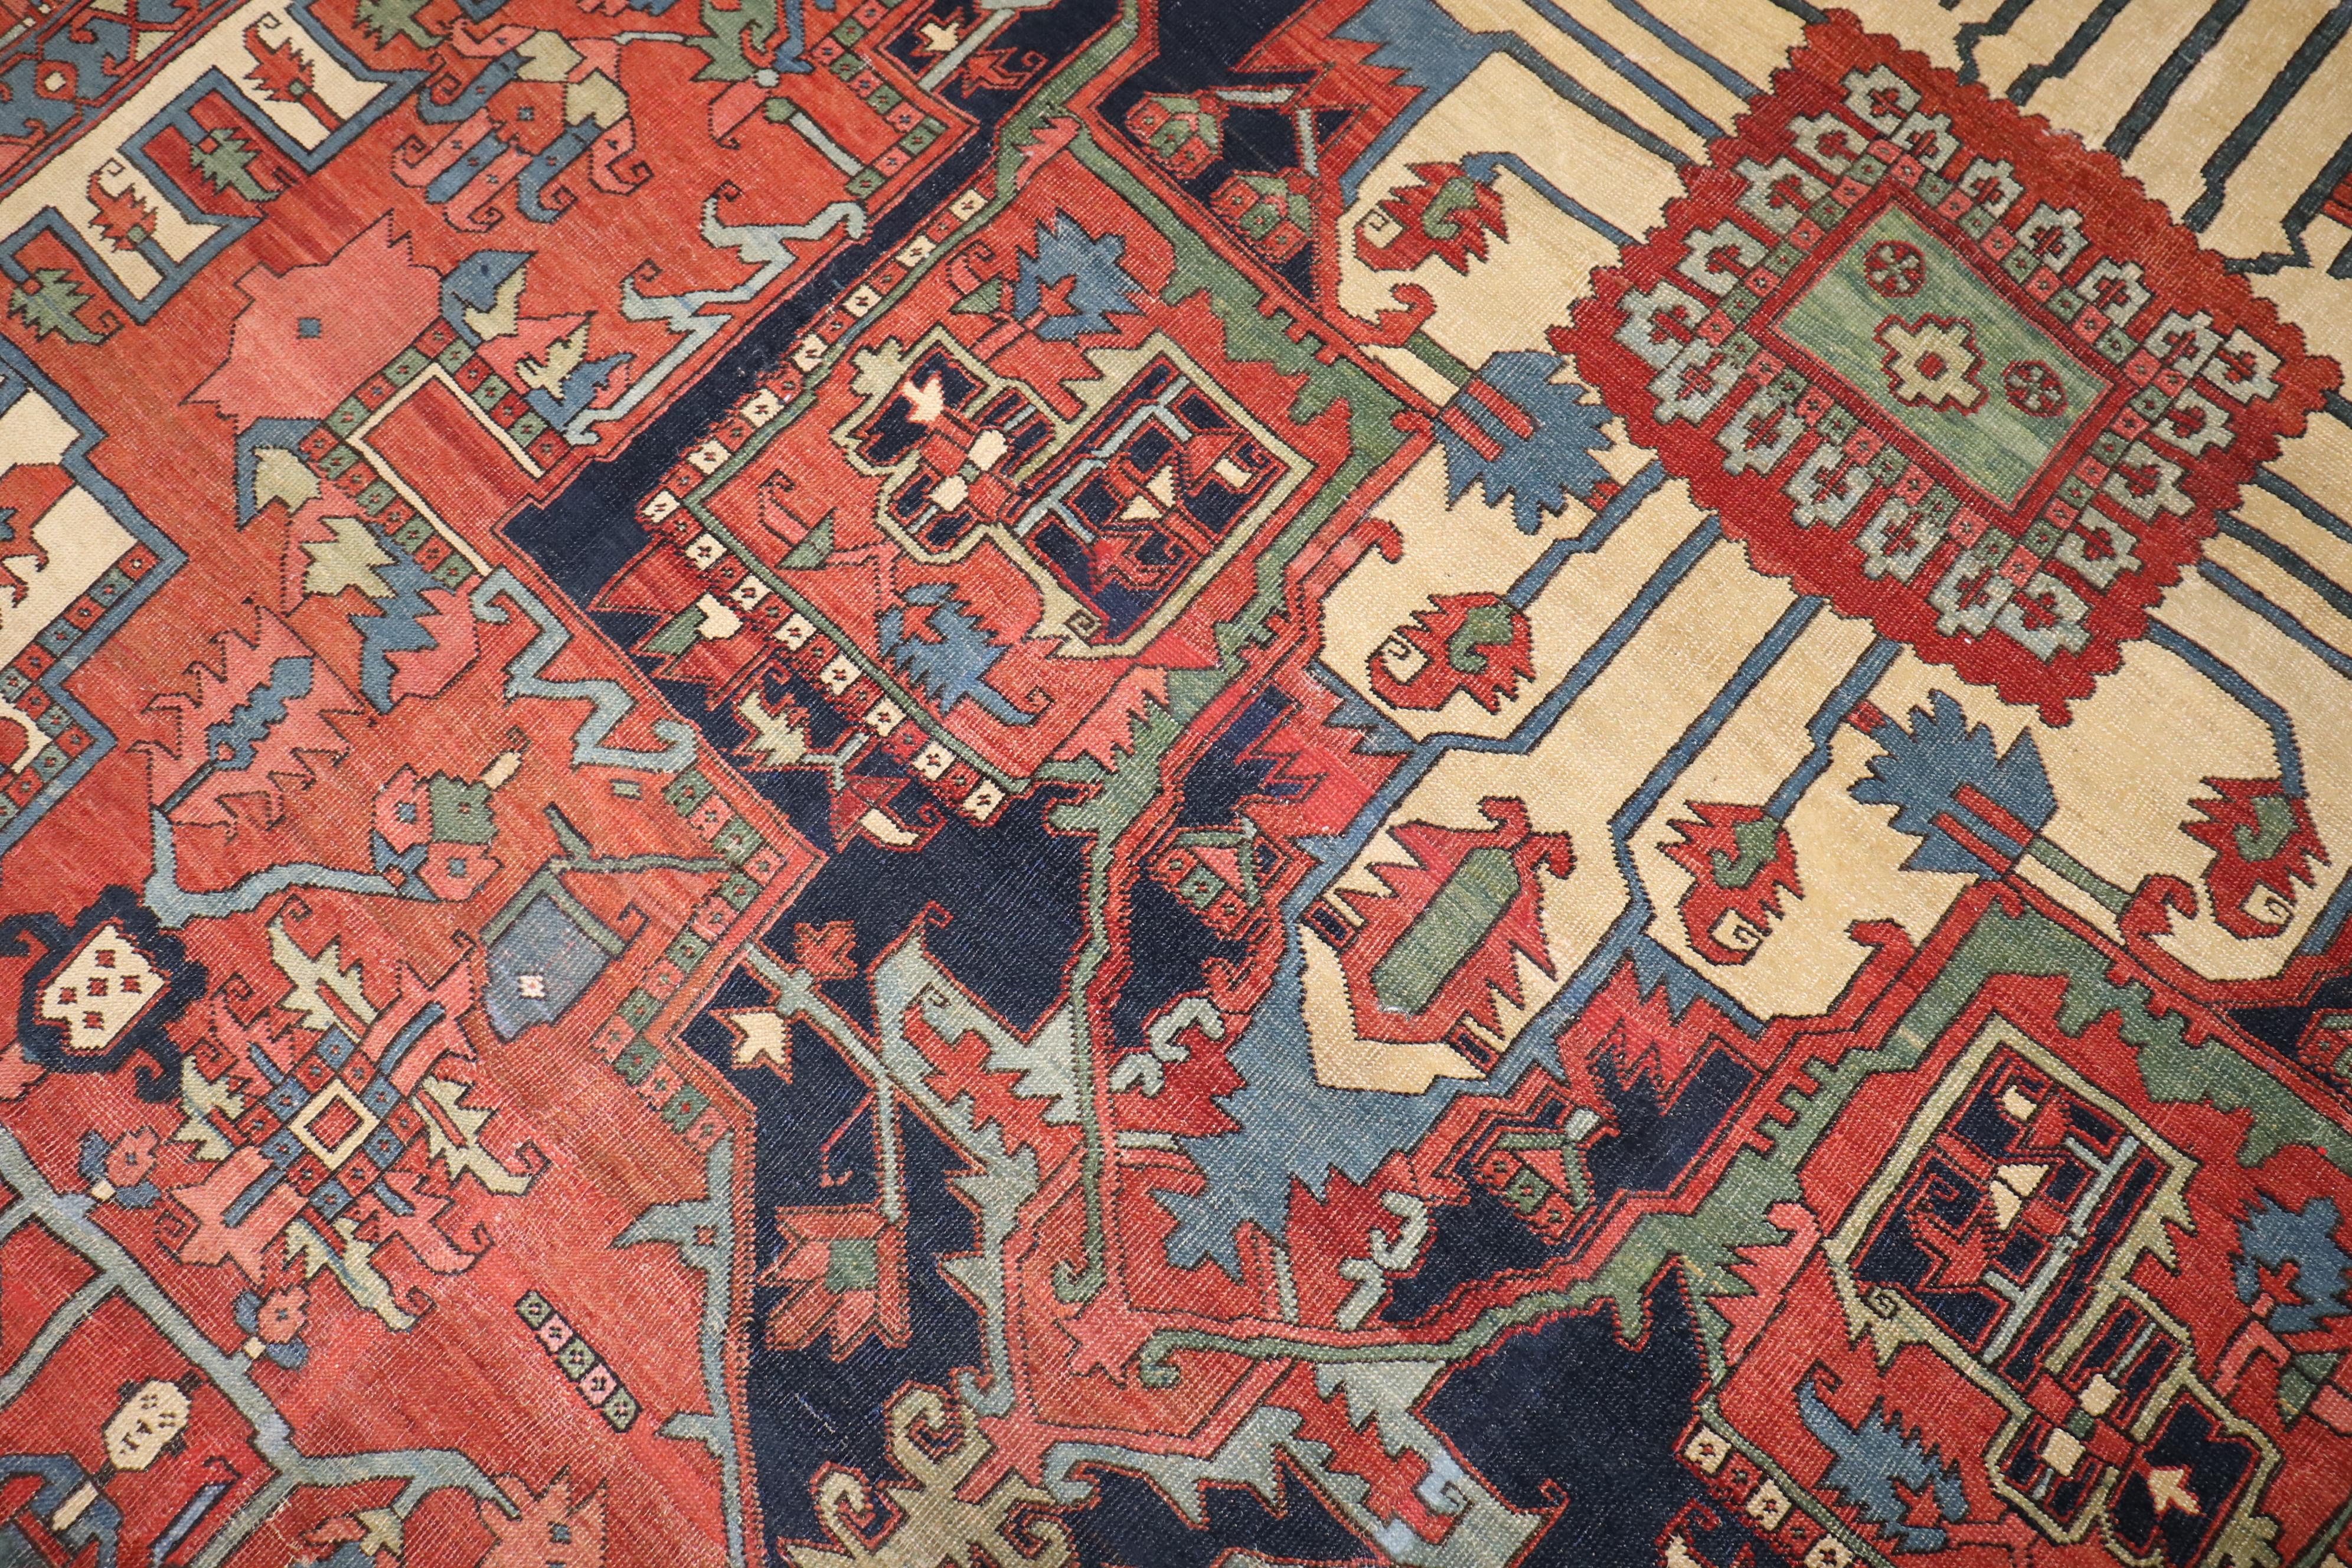 Zabihi Collection Pictorial Animal Figure Antique Persian Serapi Carpet For Sale 2